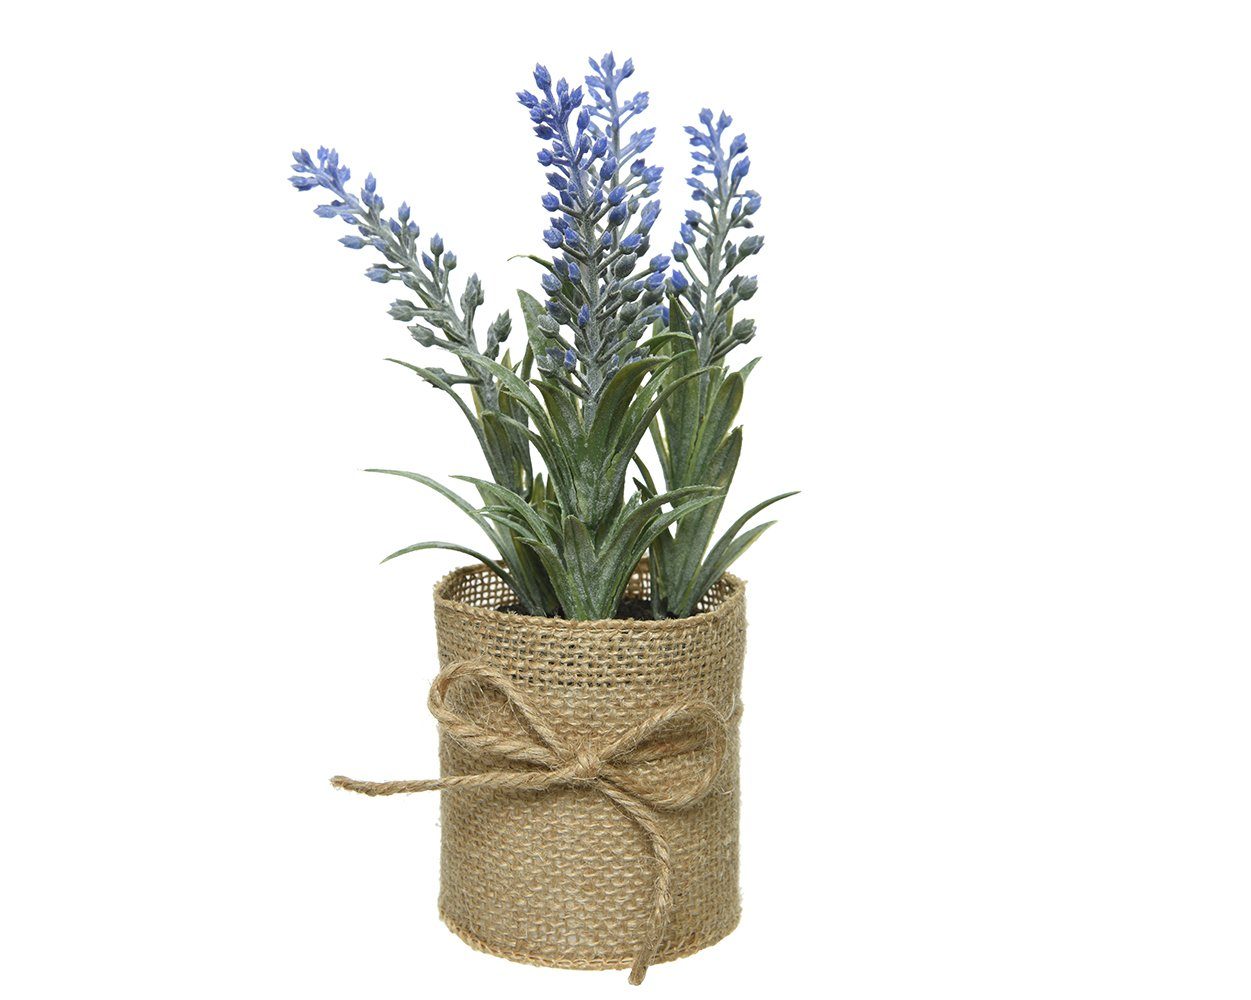 im Decoris season Topf Lavendel 7x15cm Jute decorations, künstlich Kunstpflanze,